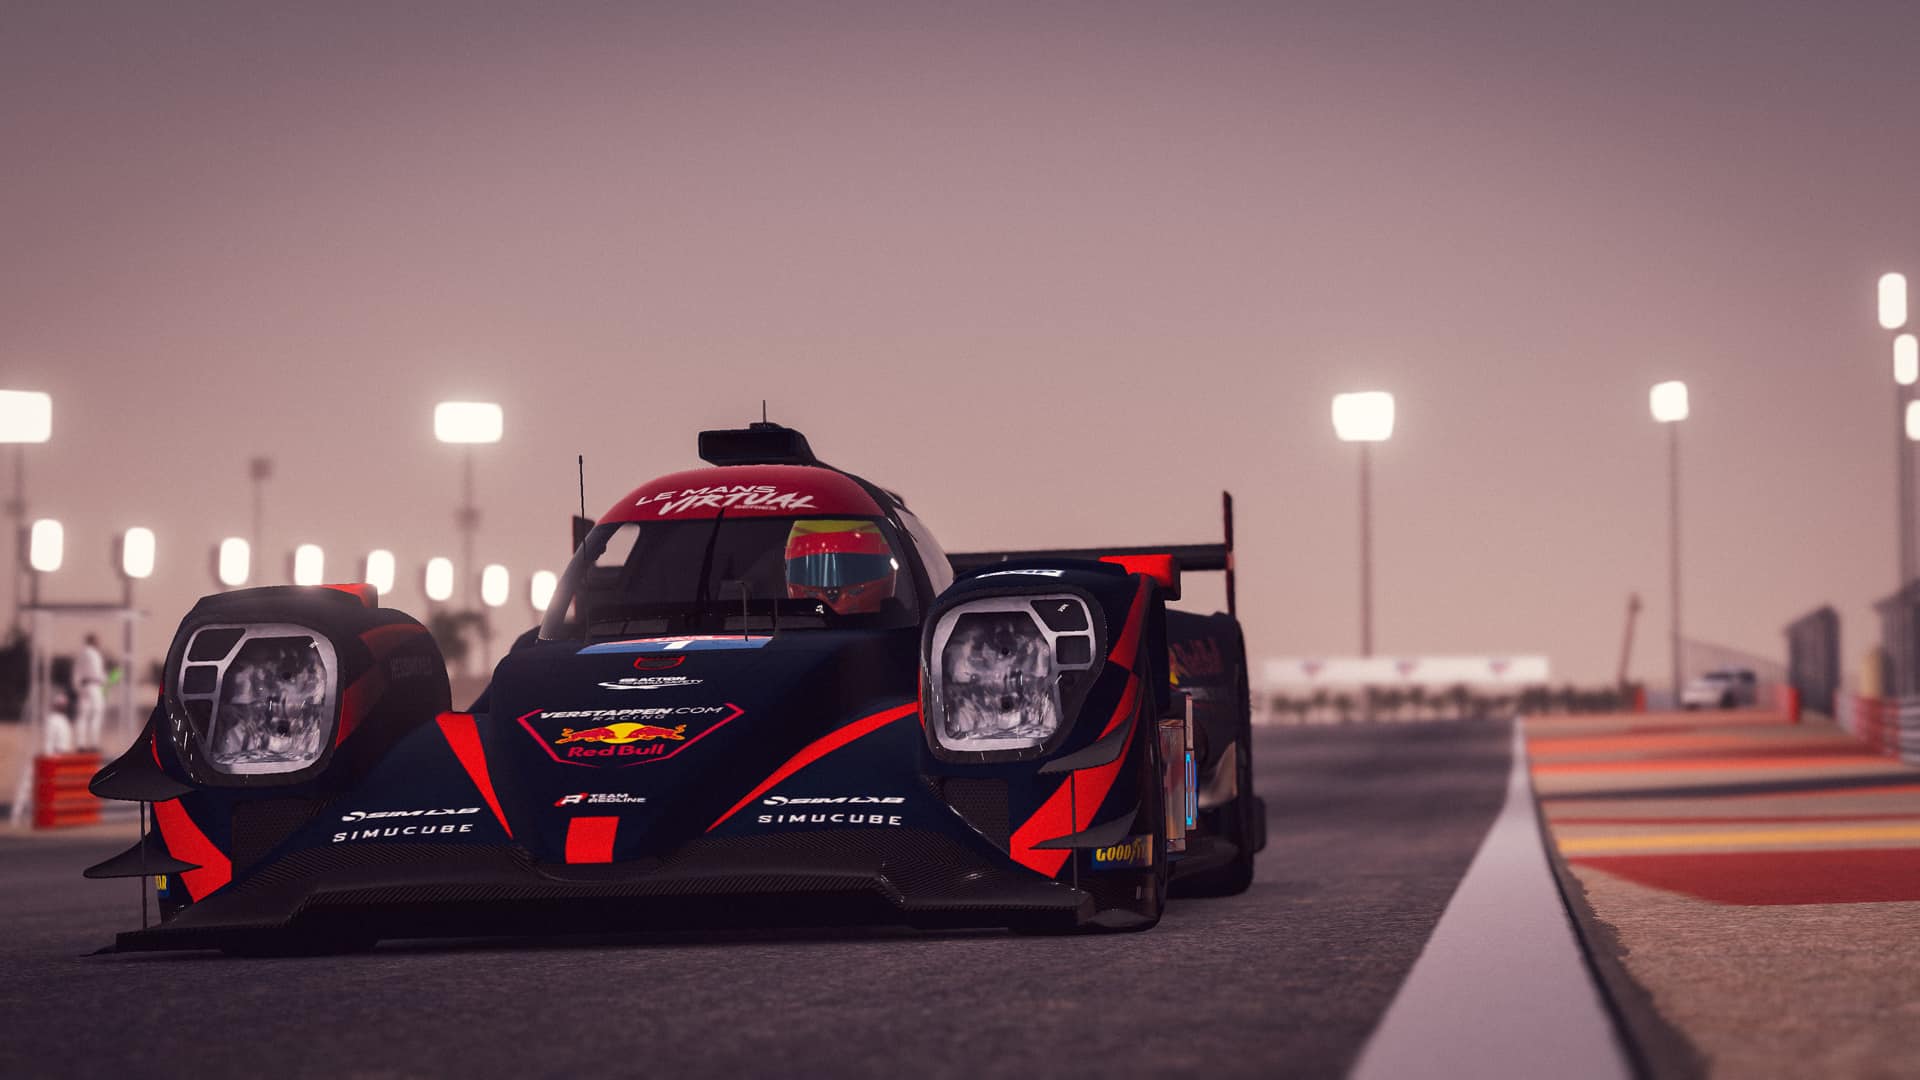 Team Redline sweeps both poles in Le Mans Virtual Series Qualifying at Bahrain